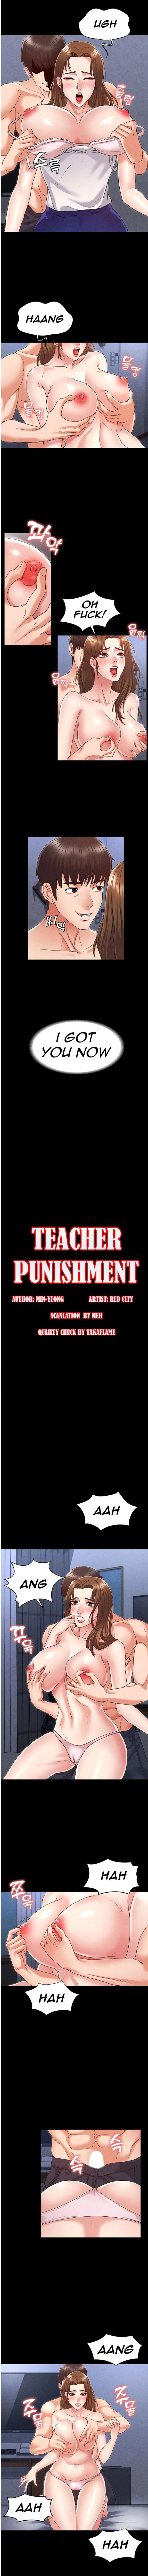 TEACHER PUNISHMENT Ch.1-15 19